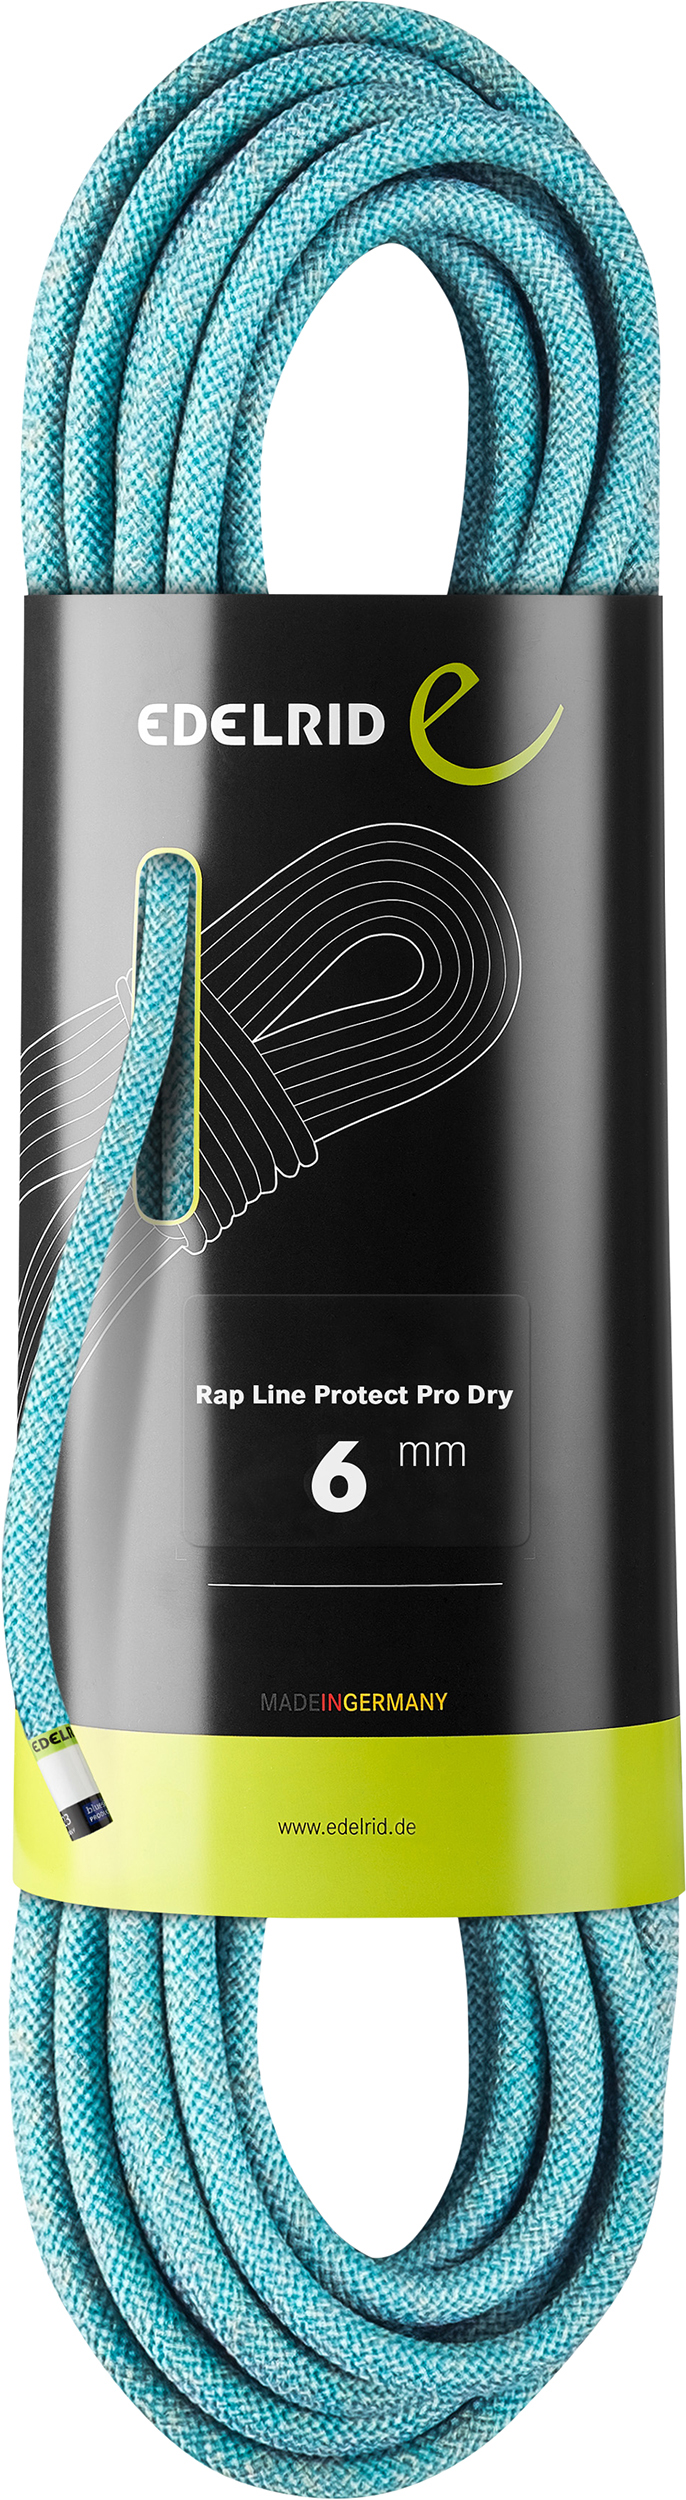 Edelrid Rap Line 6mm Protect Pro Dry Rope | MEC